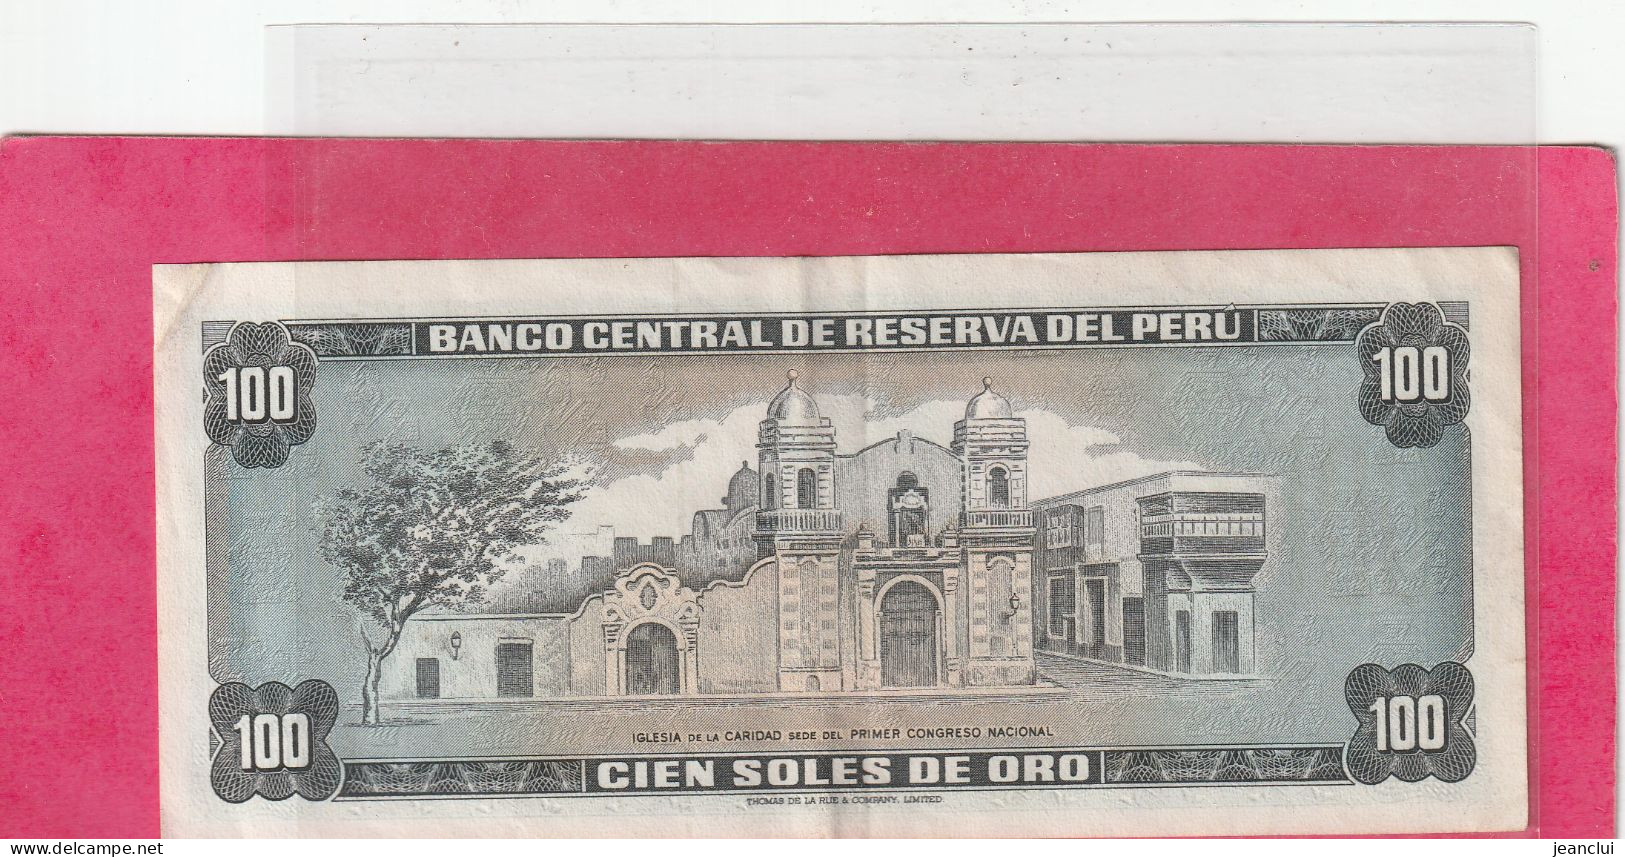 BANCO CENTRAL DE RESERVA DEL PERU .  100 SOLES DE ORO  .  16 DE MAYO DE 1974  . N°  G 121495 .  2 SCANNES  .  BEL ETAT - Pérou